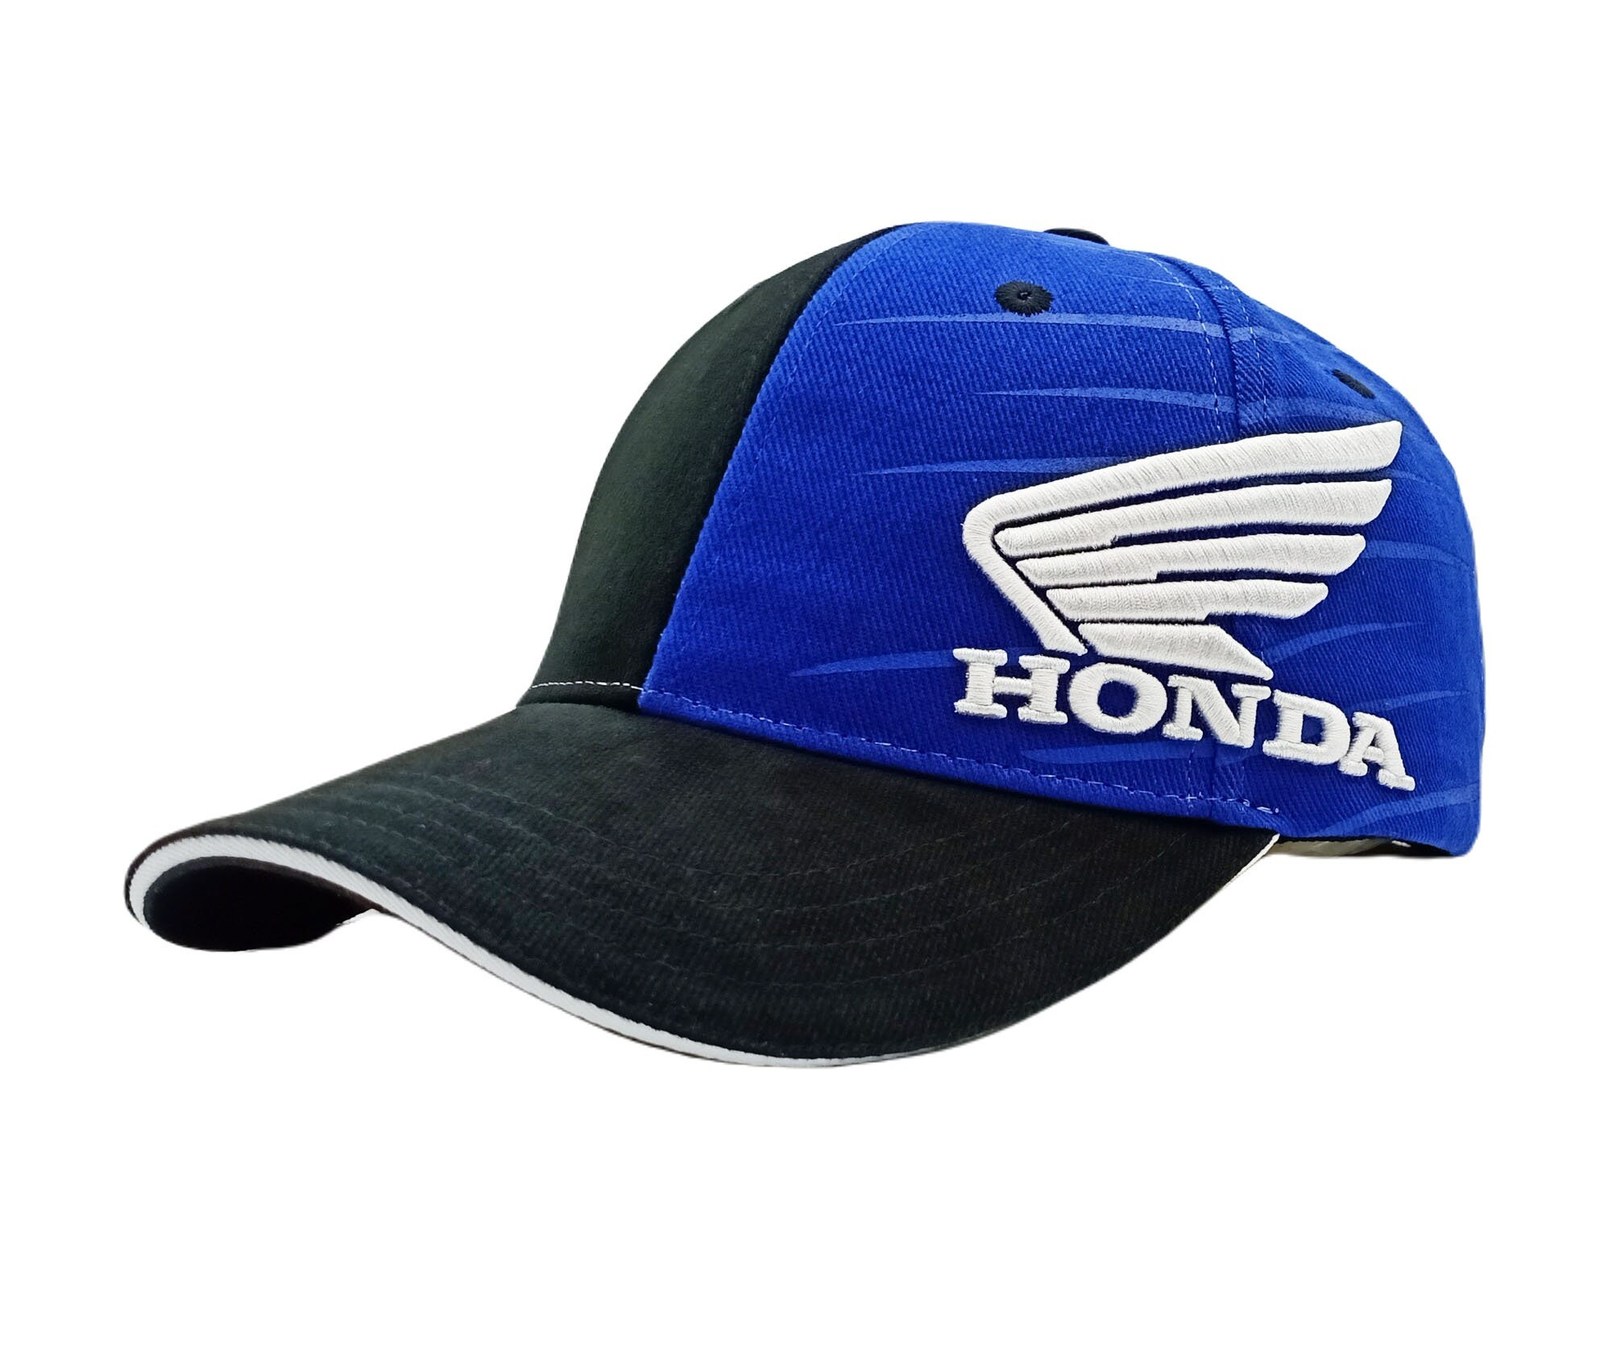 HONDA Cap Black Blue White Wing F1 MotoGP Hat